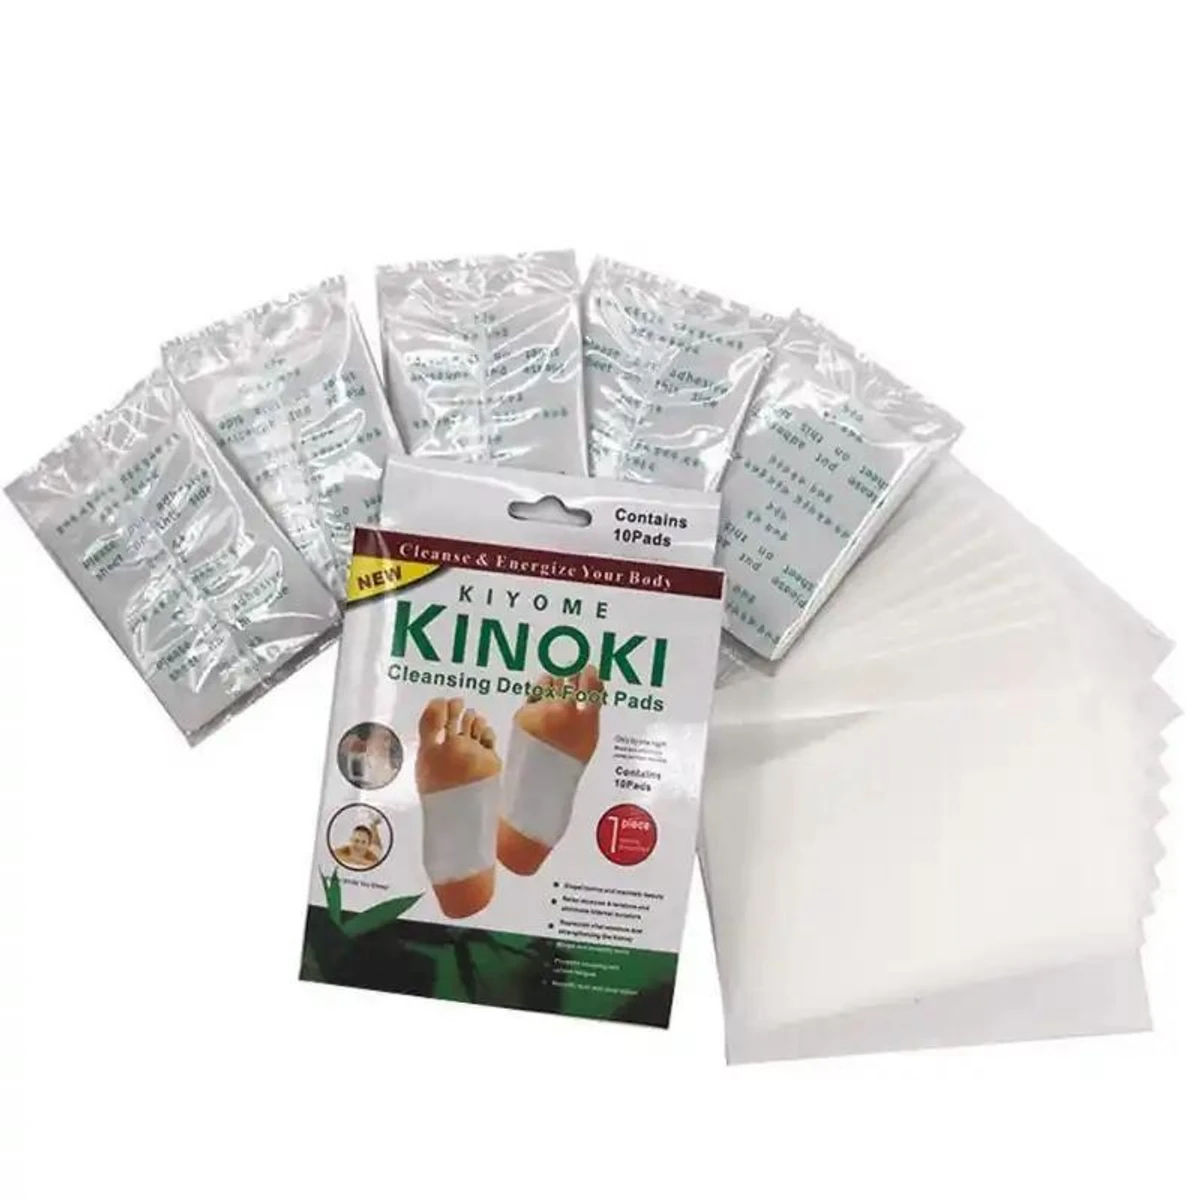 Original kinoki detox foot pad 5 Packet (50 pcs Full Course)